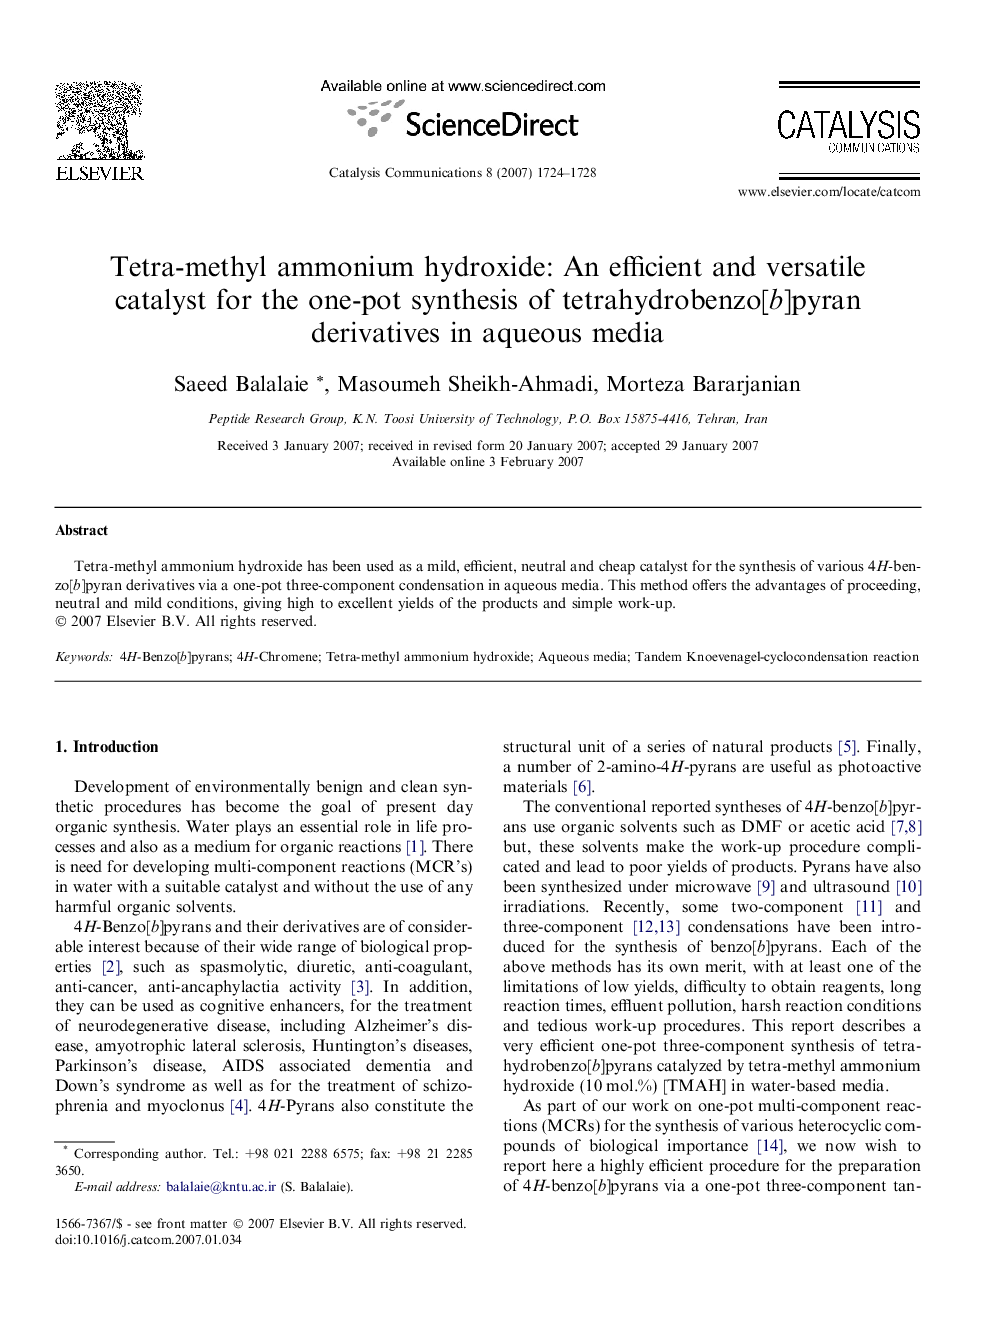 Tetra-methyl ammonium hydroxide: An efficient and versatile catalyst for the one-pot synthesis of tetrahydrobenzo[b]pyran derivatives in aqueous media